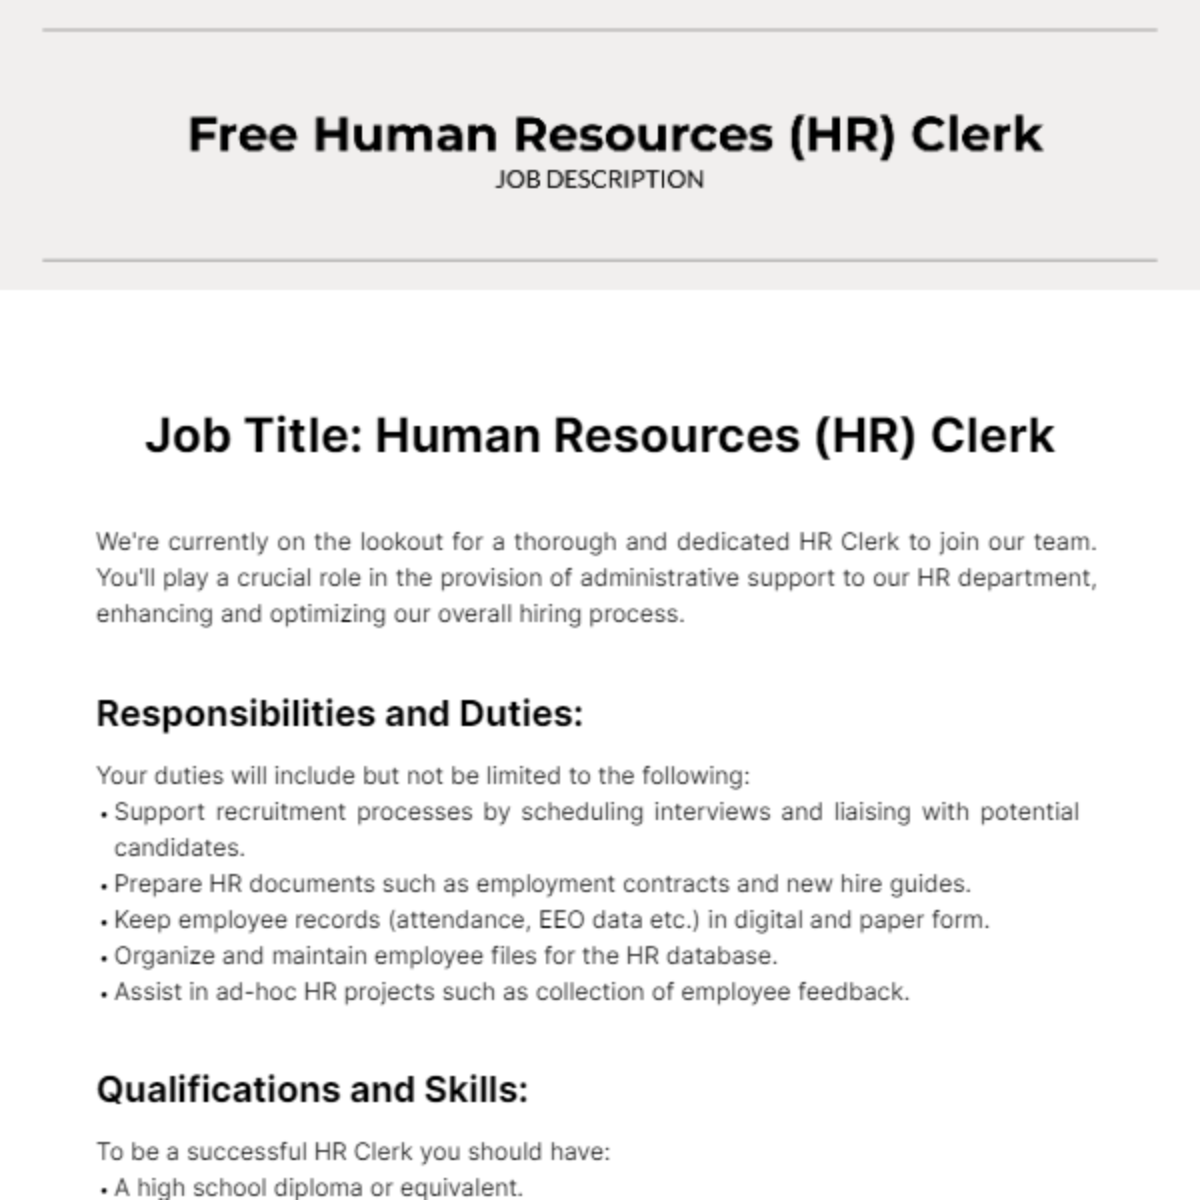 Human Resources (HR) Clerk Job Description Template